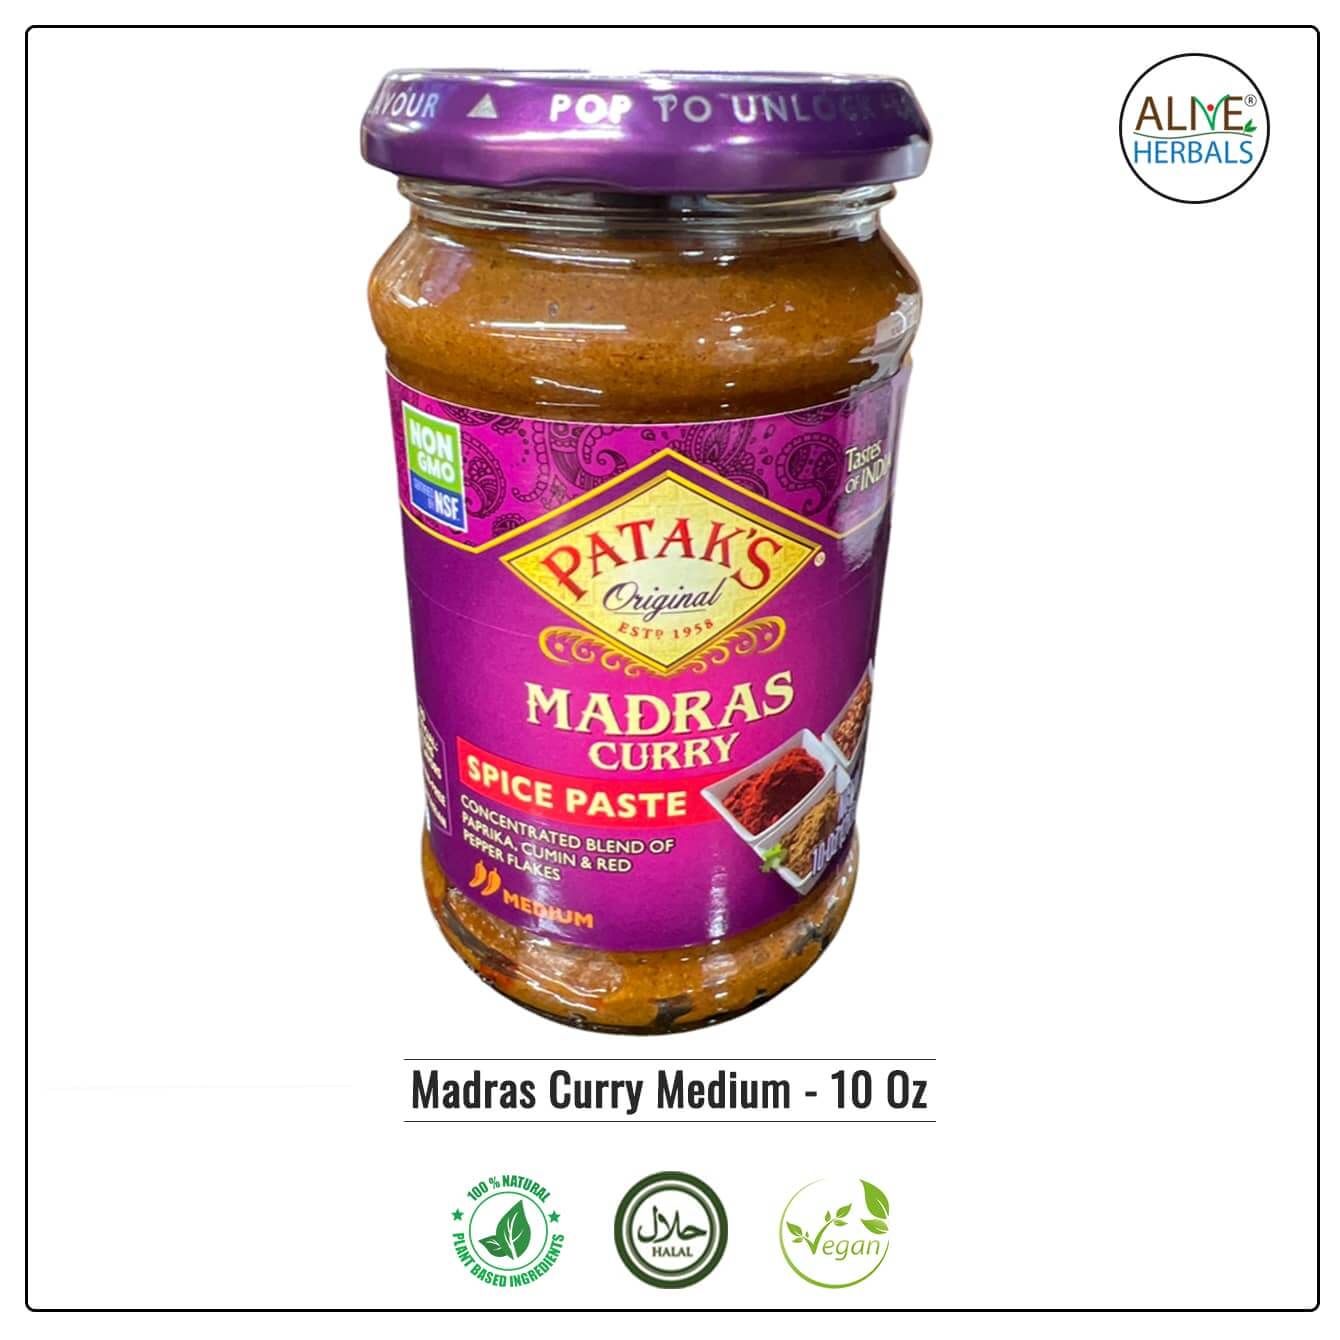 Madras Curry Medium - Alive Herbals